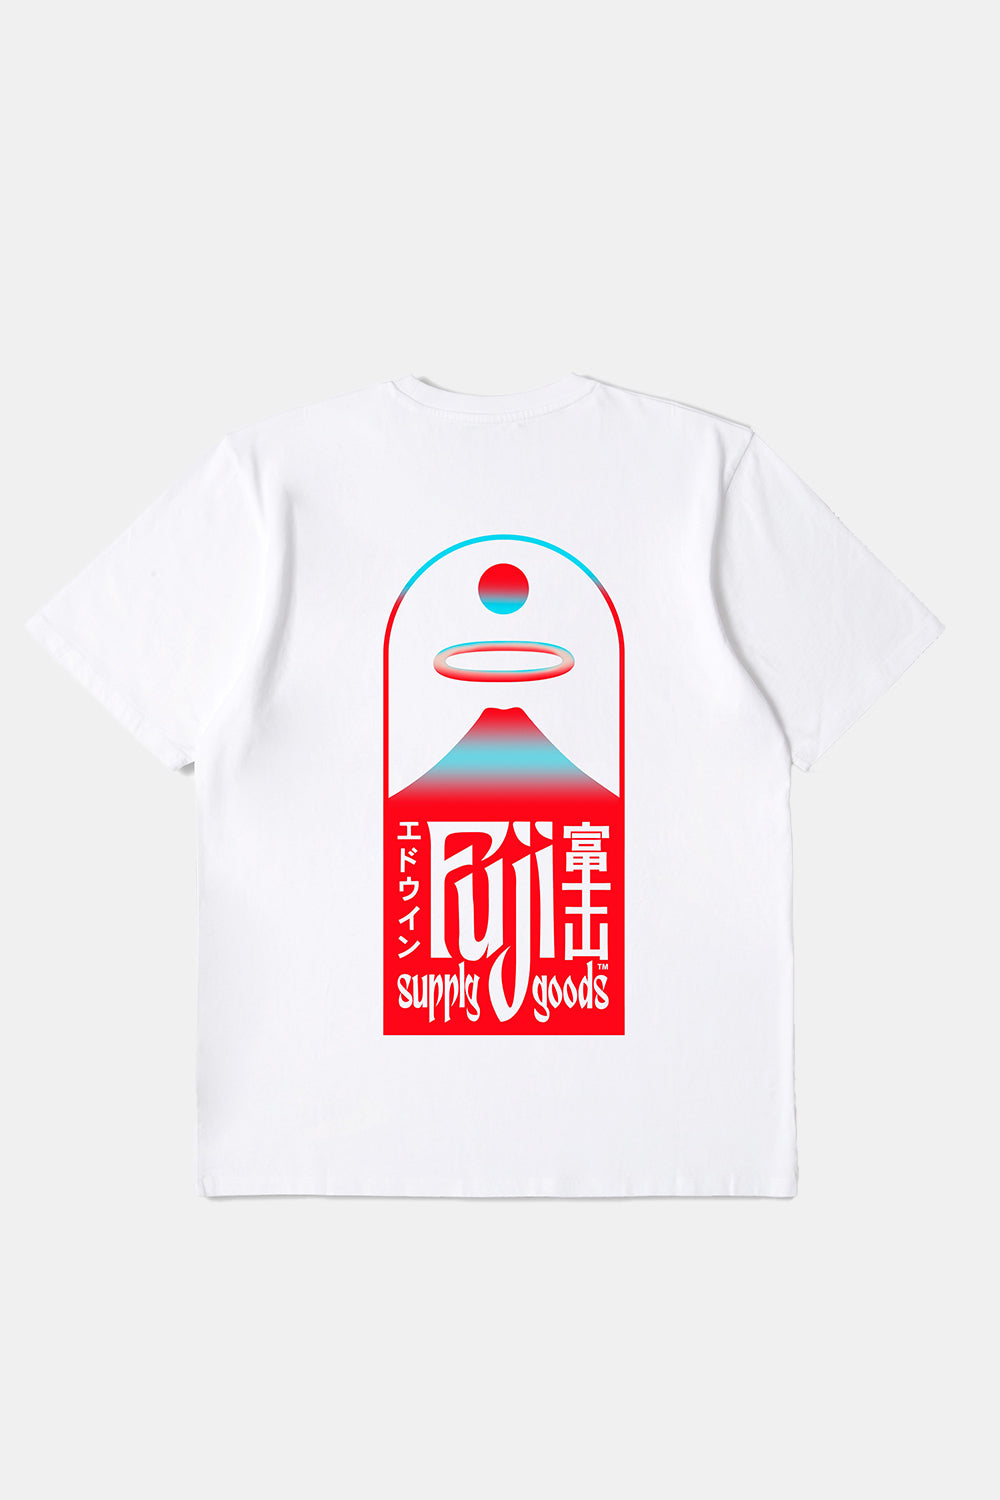 Edwin Fuji Supply Goods T-Shirt (White)